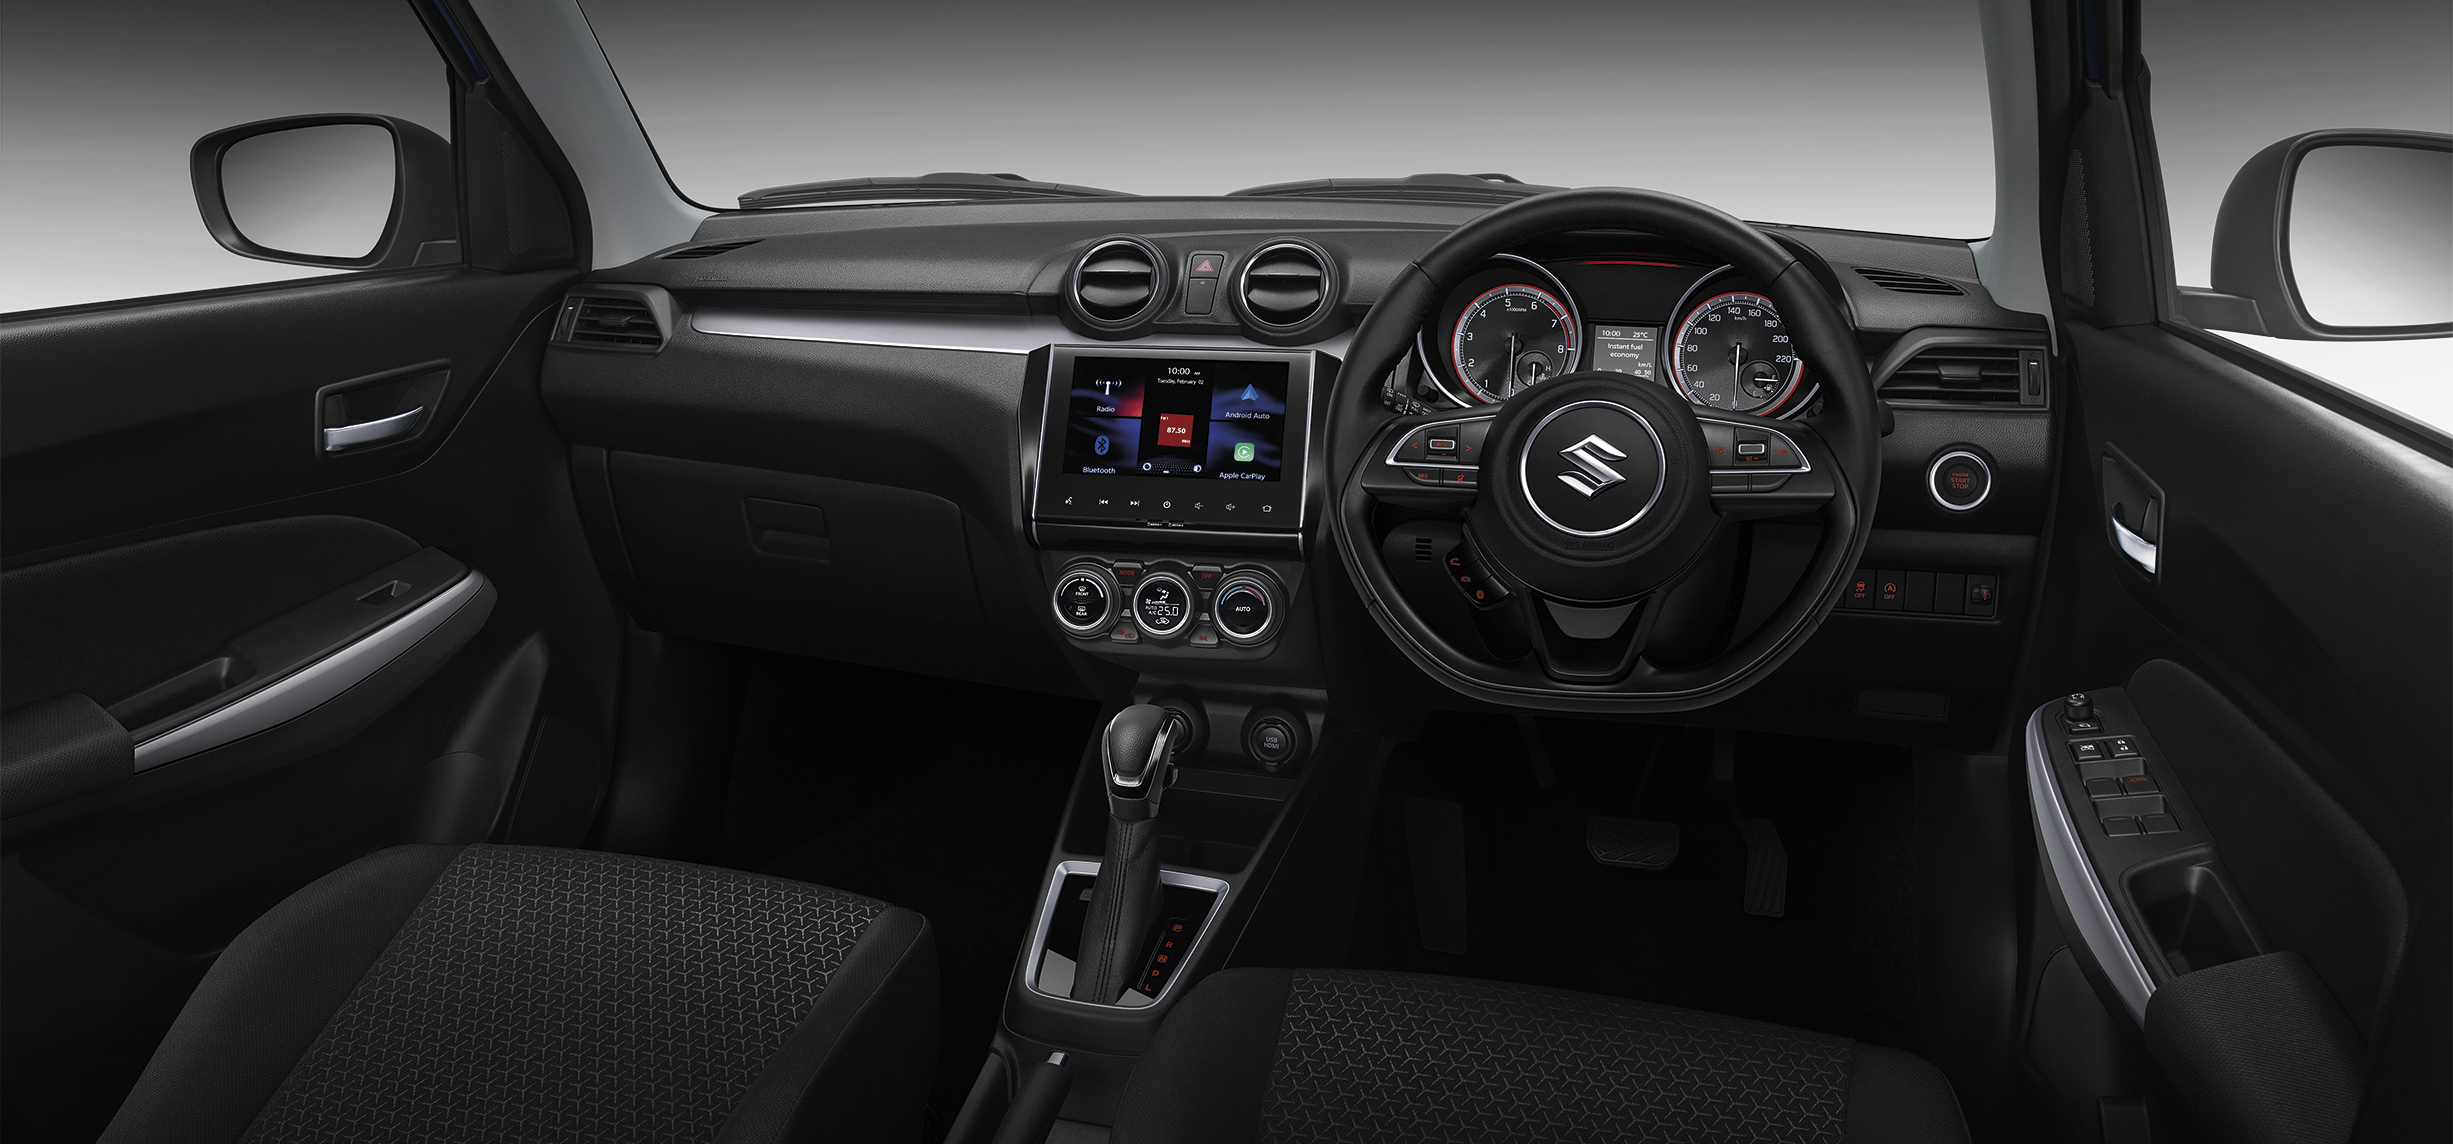 NEW SUZUKI SWIFT upgraded comfort sports-car design passenger cabin with 8-inch touchscreen